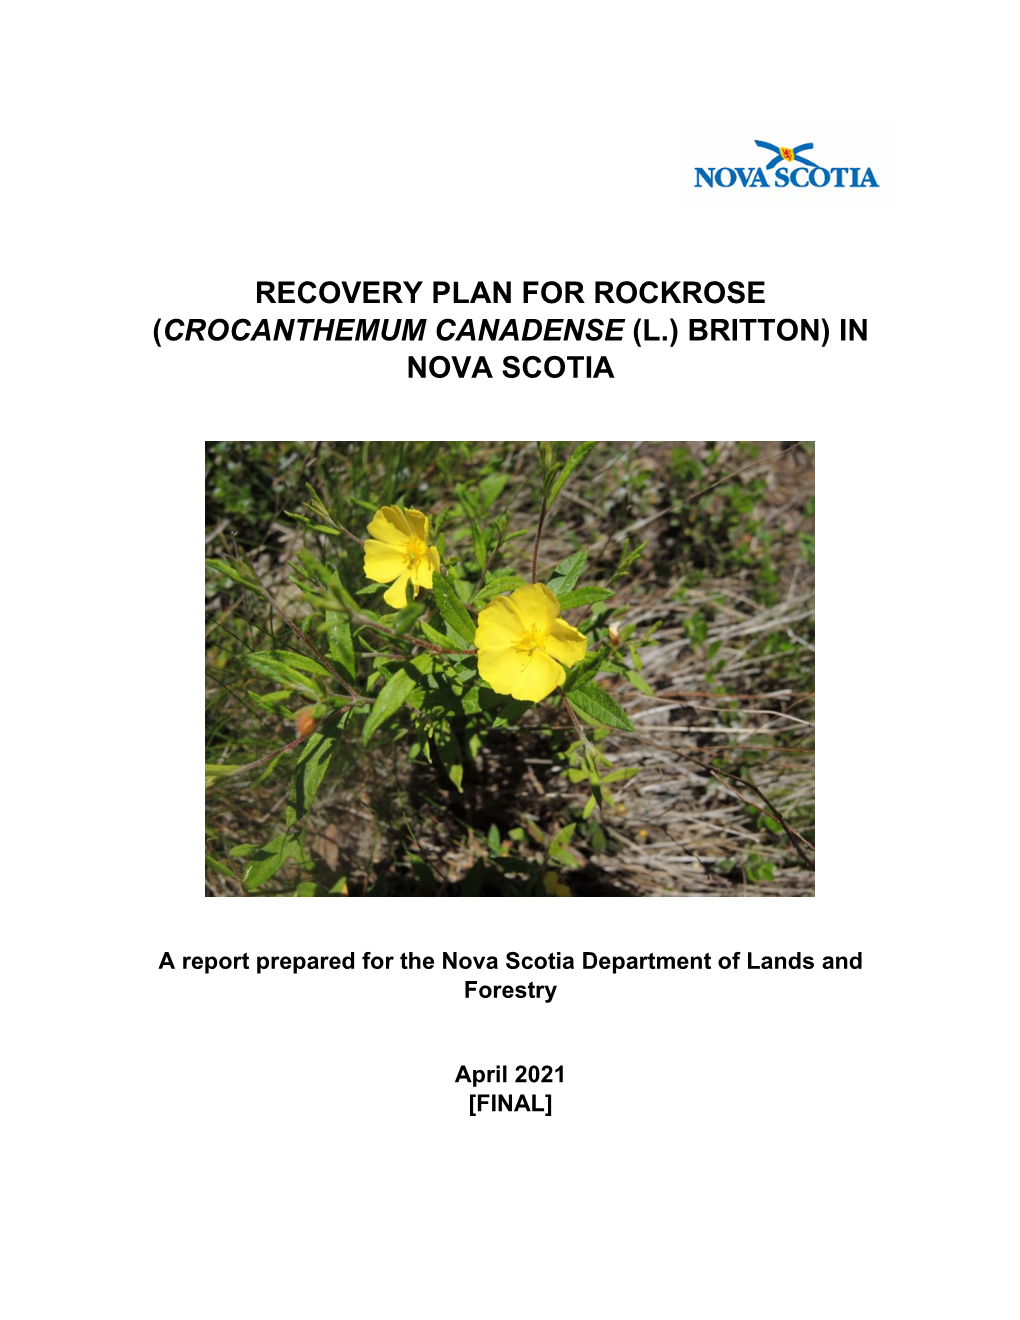 Recovery Plan for Rockrose (Crocanthemum Canadense (L.) Britton) in Nova Scotia